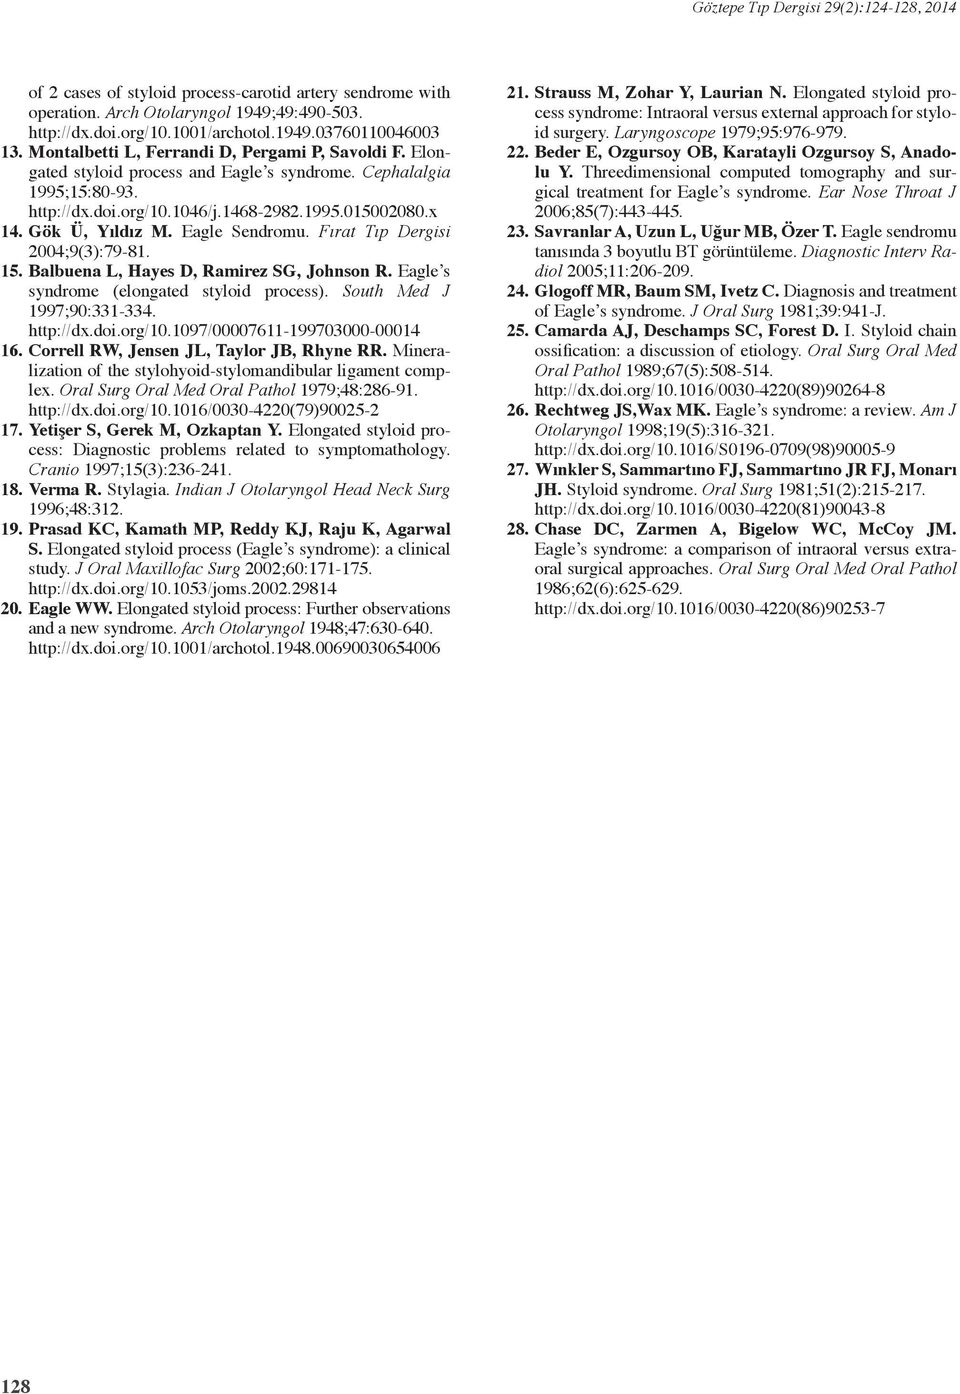 Eagle Sendromu. Fırat Tıp Dergisi 2004;9(3):79-81. 15. Balbuena L, Hayes D, Ramirez SG, Johnson R. Eagle s syndrome (elongated styloid process). South Med J 1997;90:331-334. http://dx.doi.org/10.